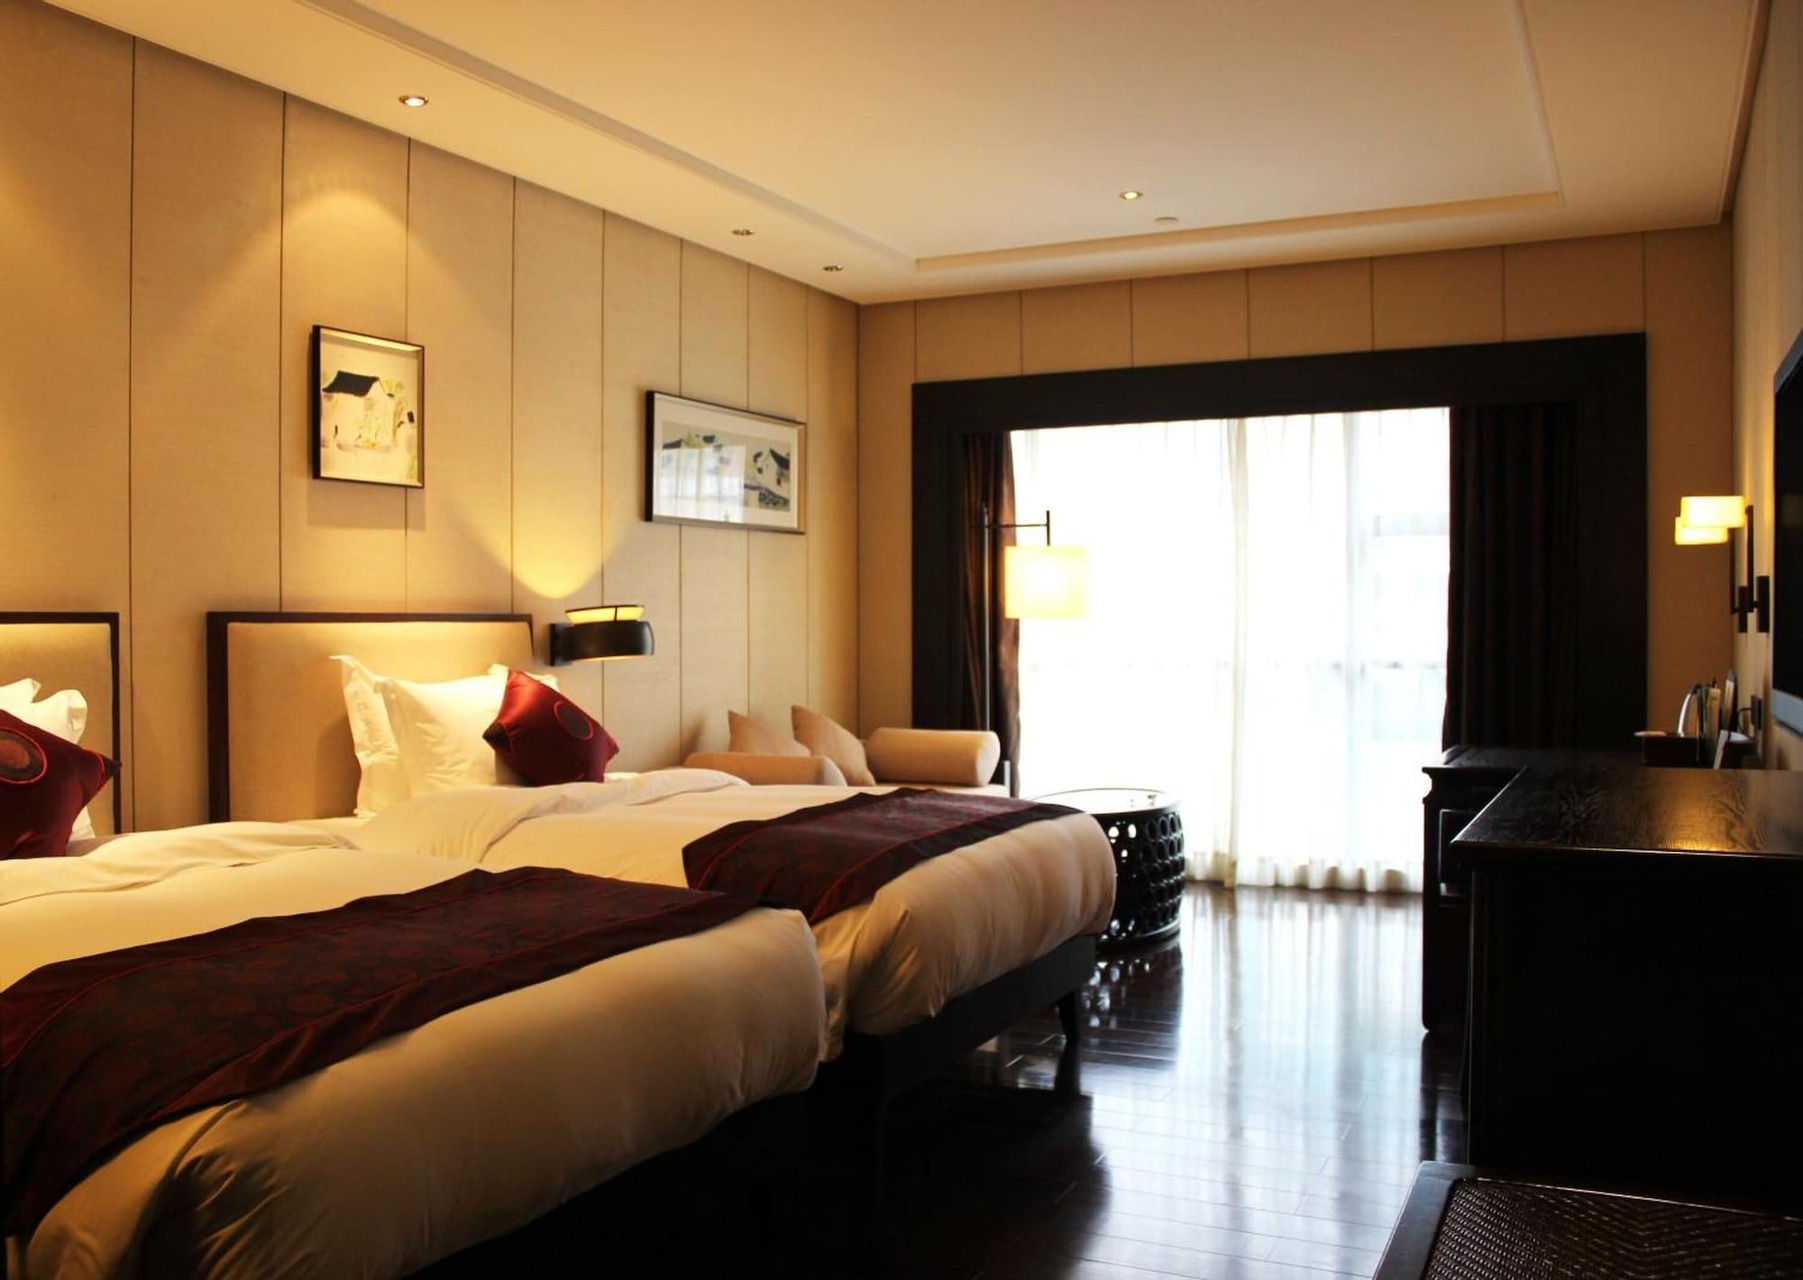 Bedroom 3, Xiang Yun Sha Garden Hotel, Foshan